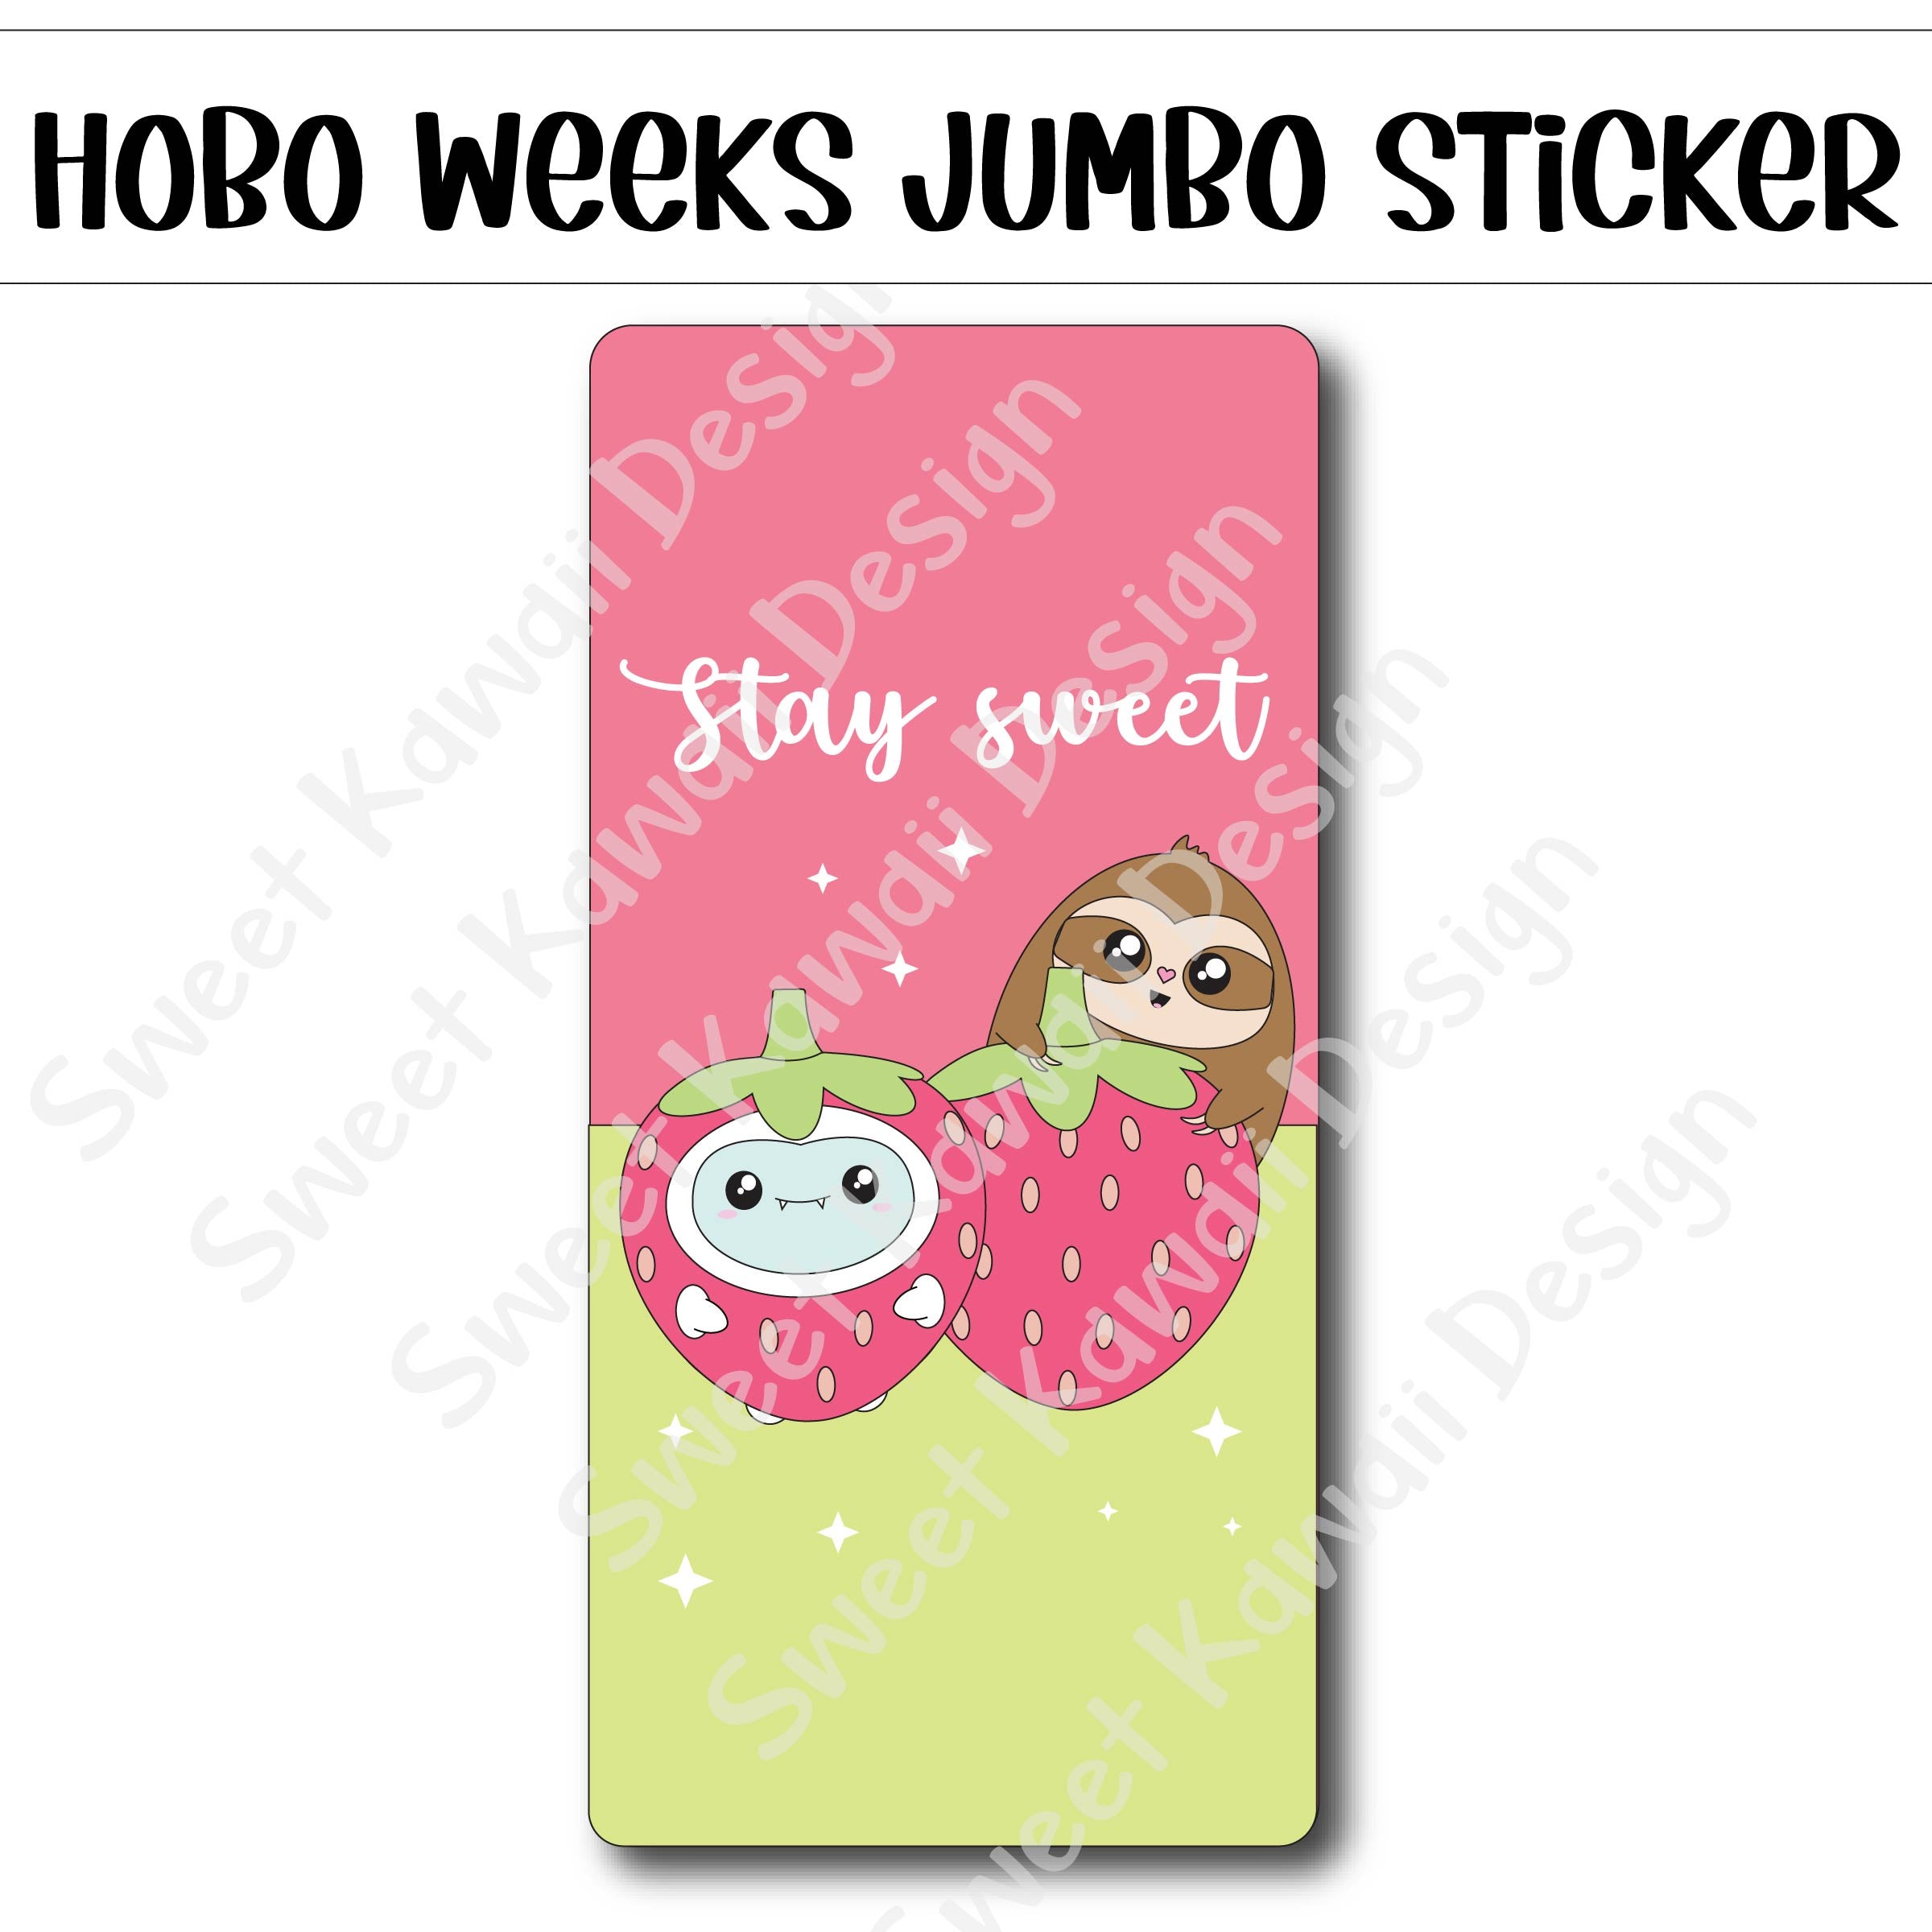 Kawaii Jumbo Sticker - Stay Sweet - Size Options Available